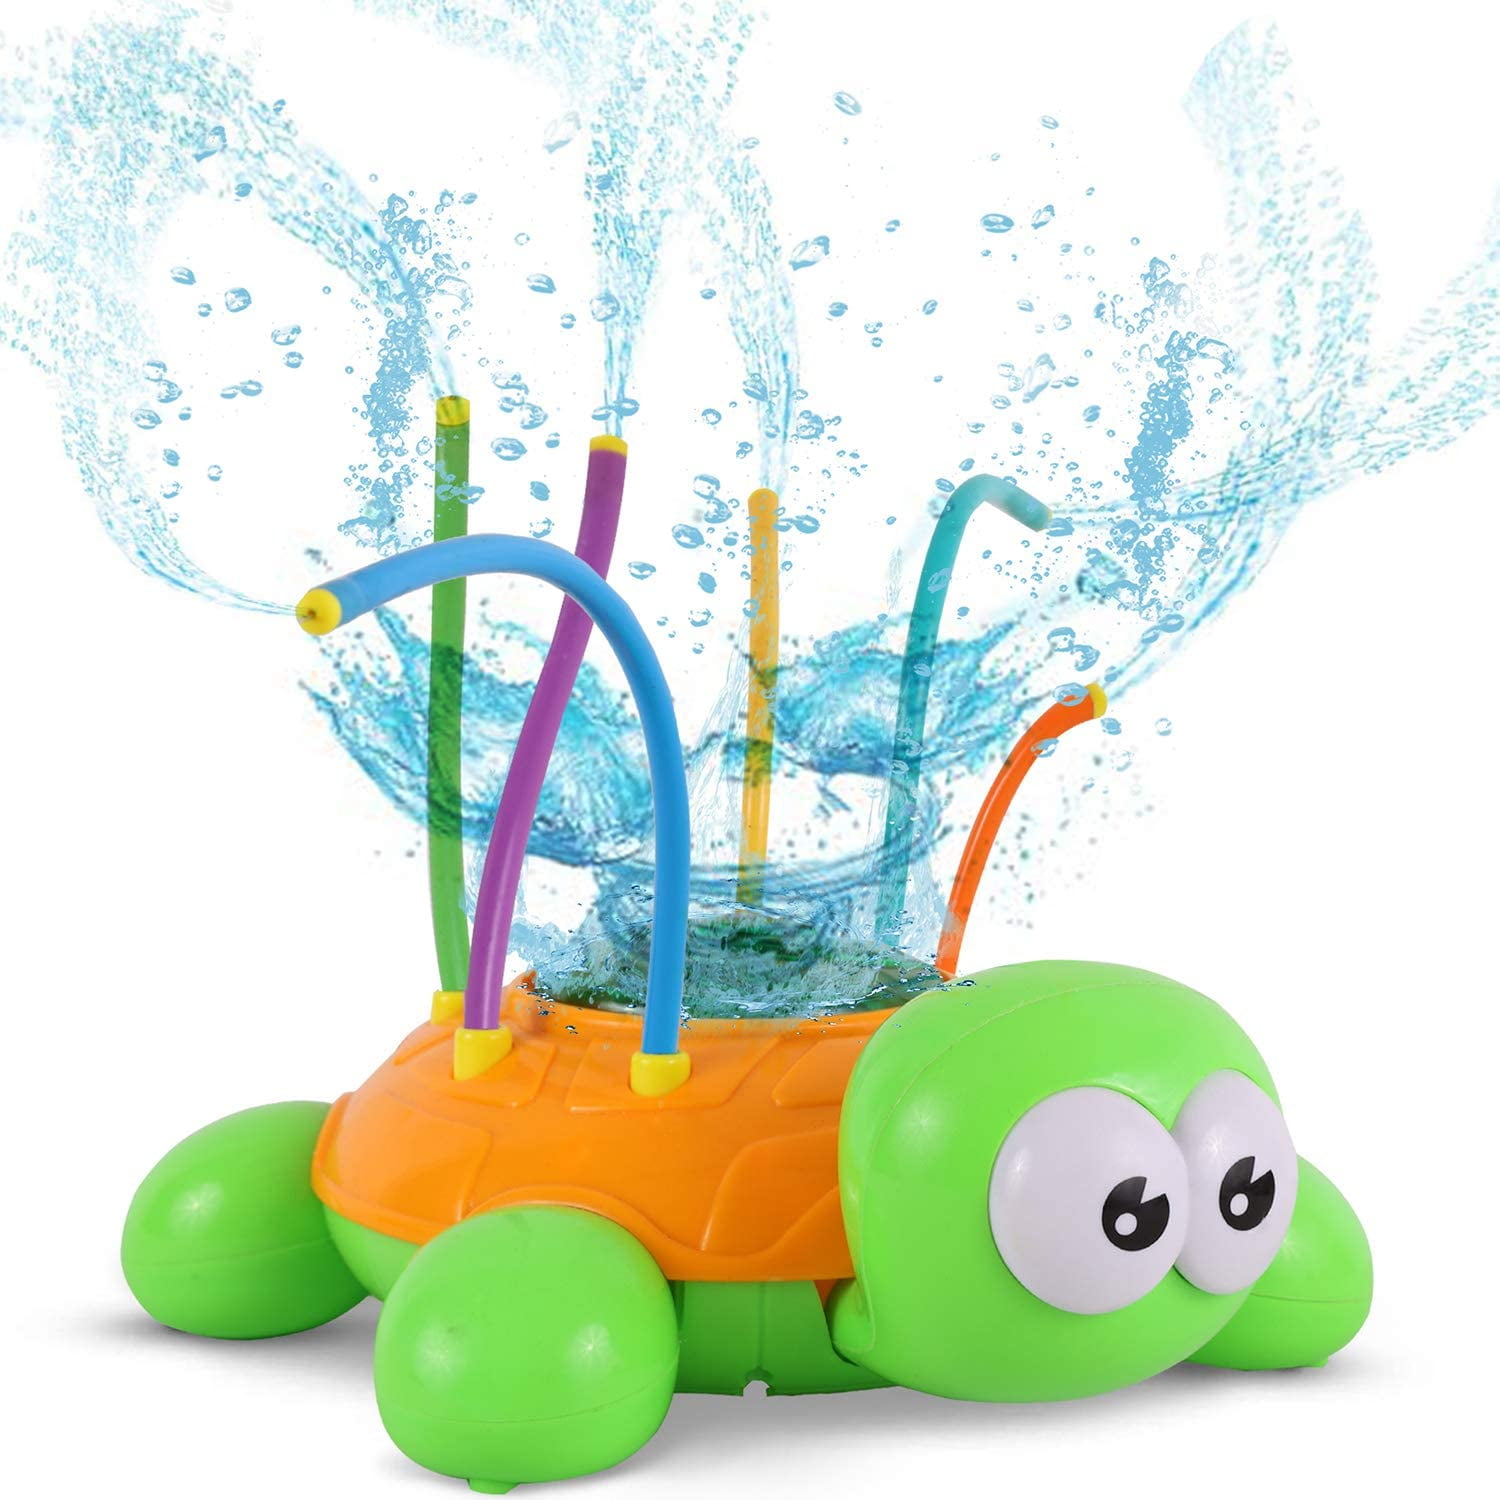 Flower Sprinkler Water Toy Free-Swinging Bathtub Toys for Garden Backyard for Lawn Bathroom FastUU Outdoor Toys Water Sprinkler Toy